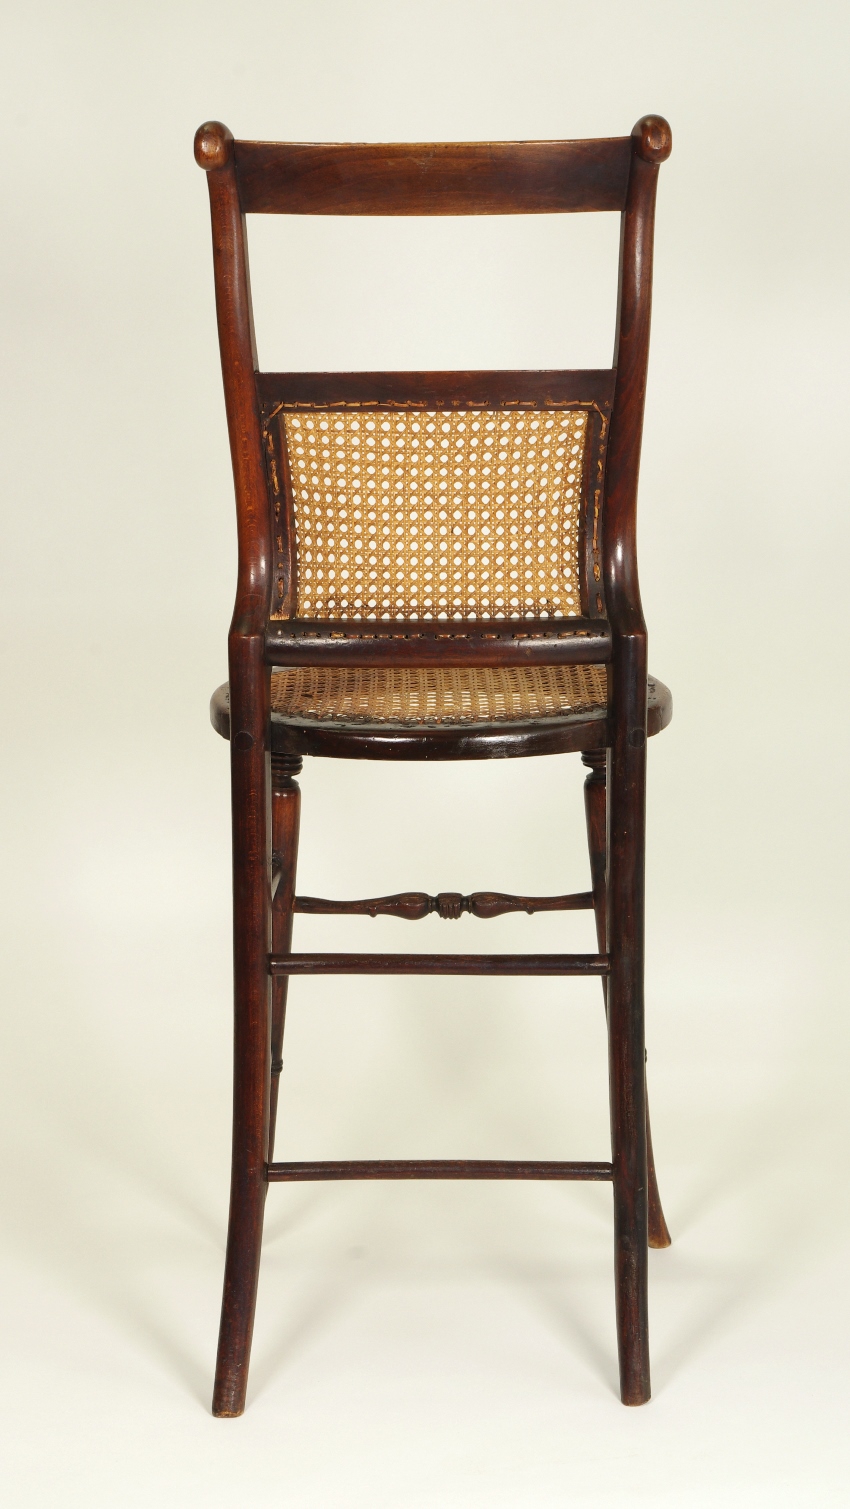 Regency Child's Correction Chair, c. 1830